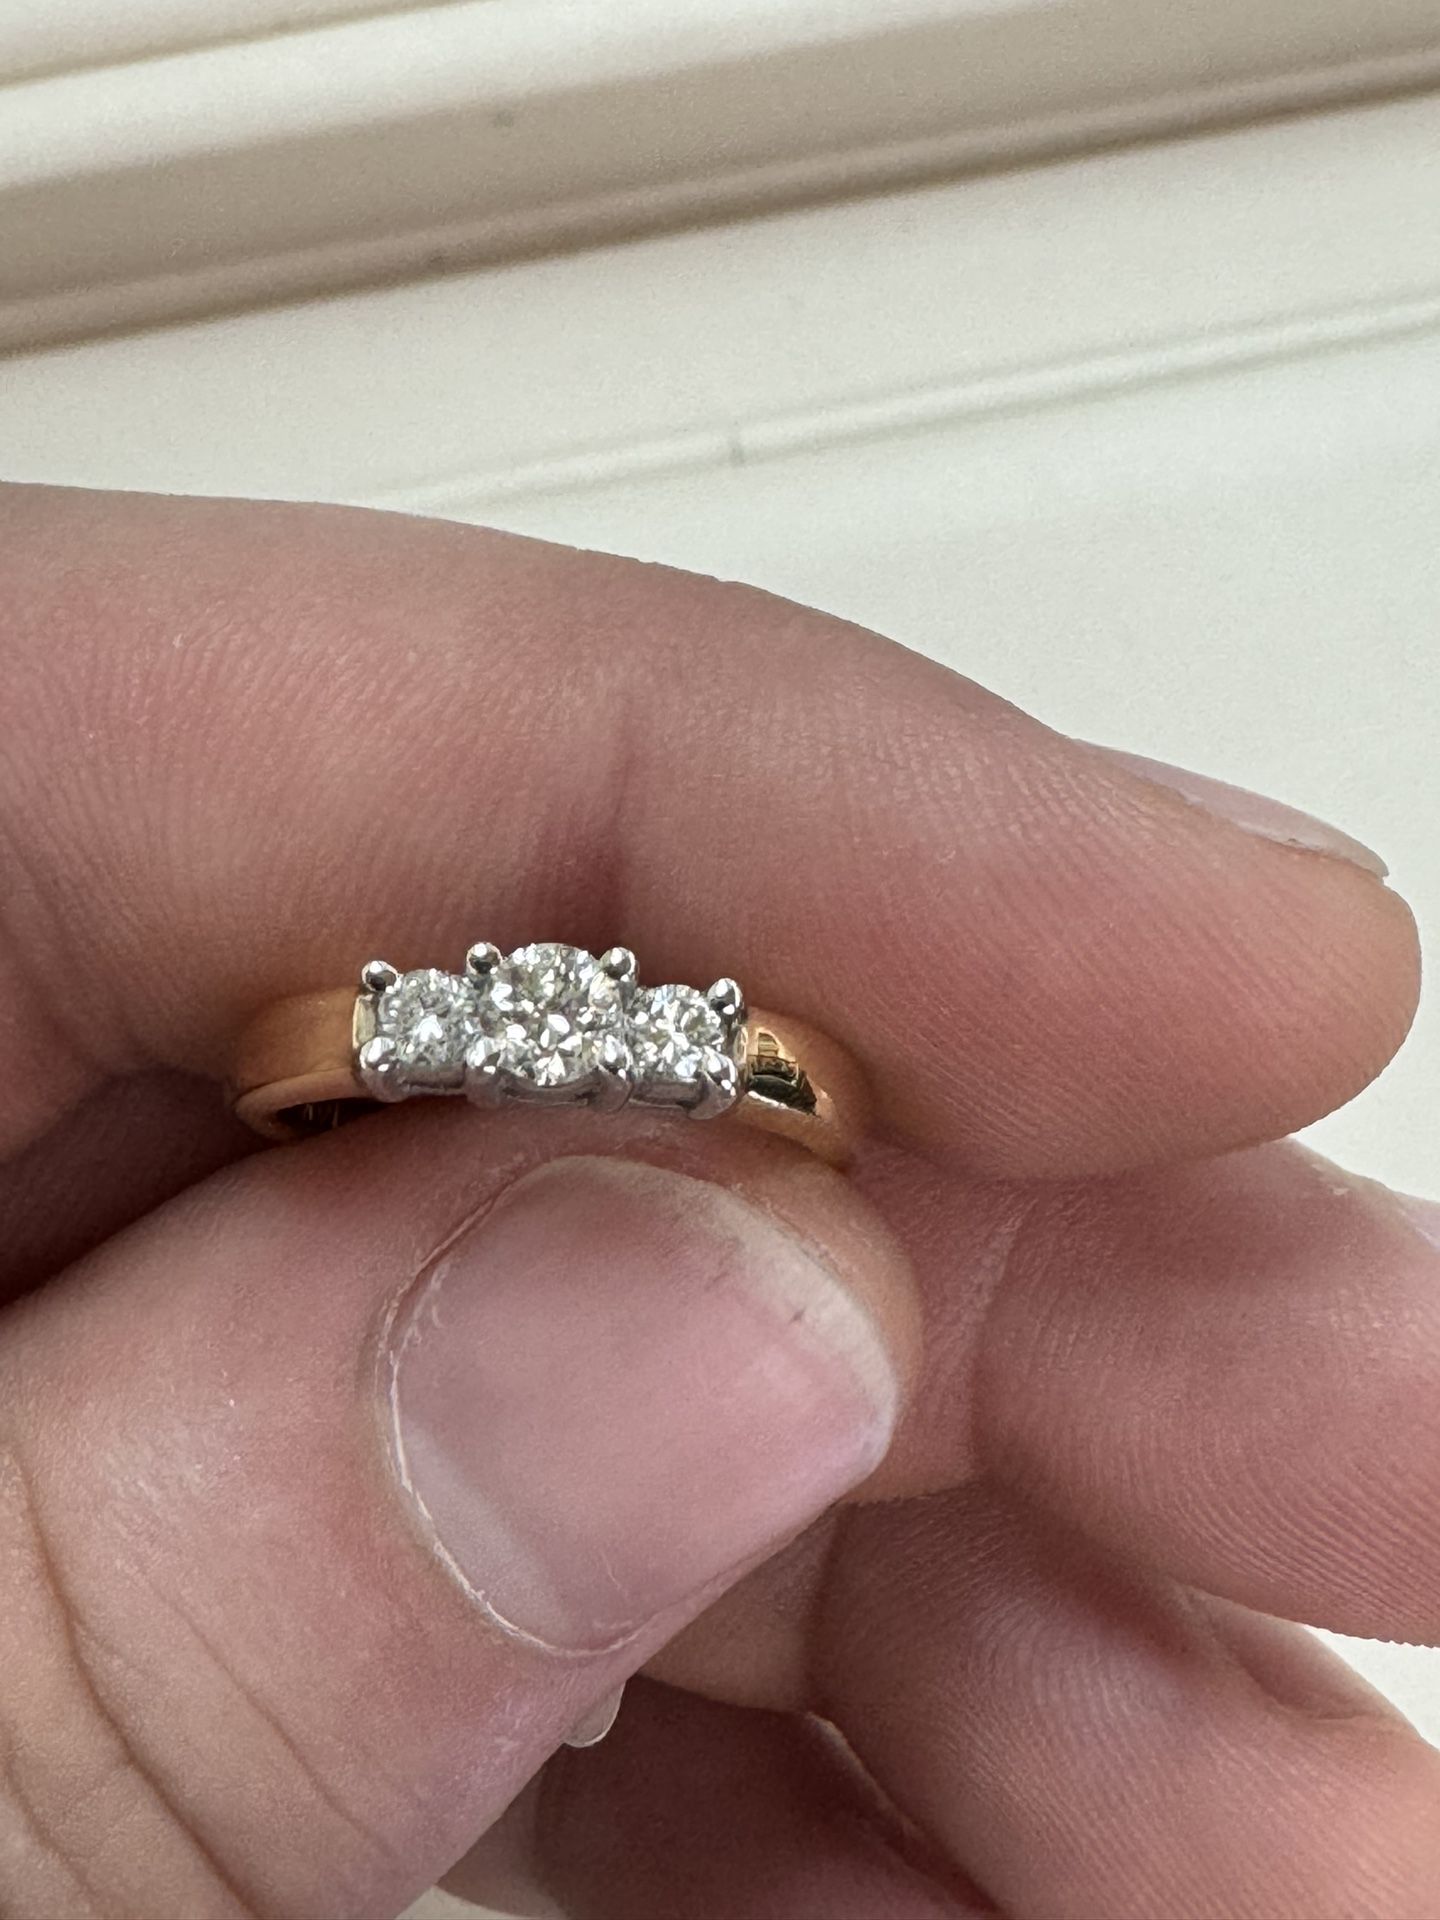 Ring (14k 0.50 Ctw Diamonds) 💍 